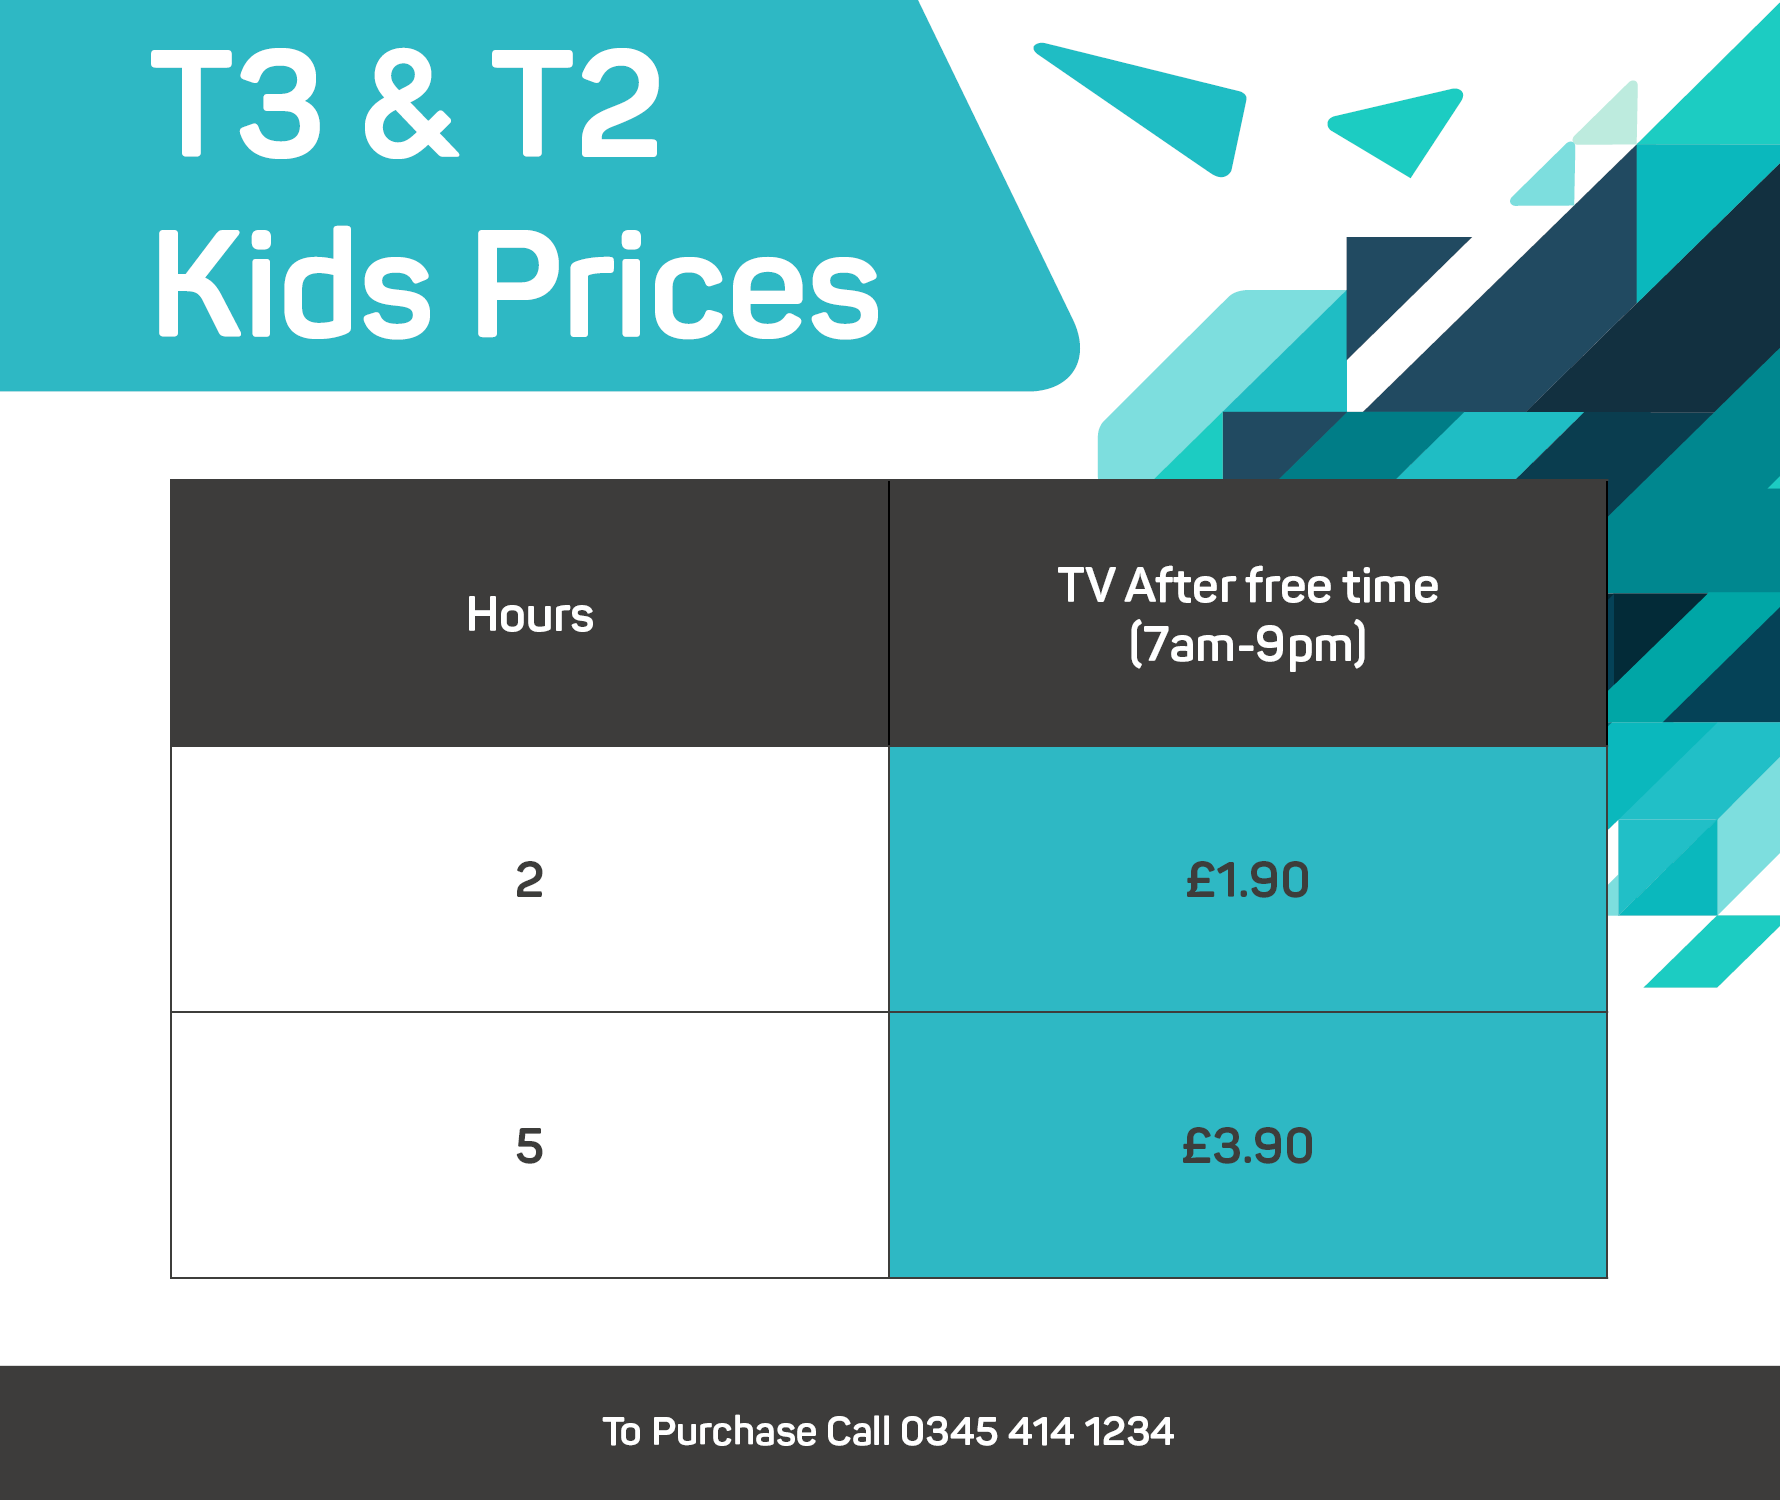 T3 & T2 Kids Prices